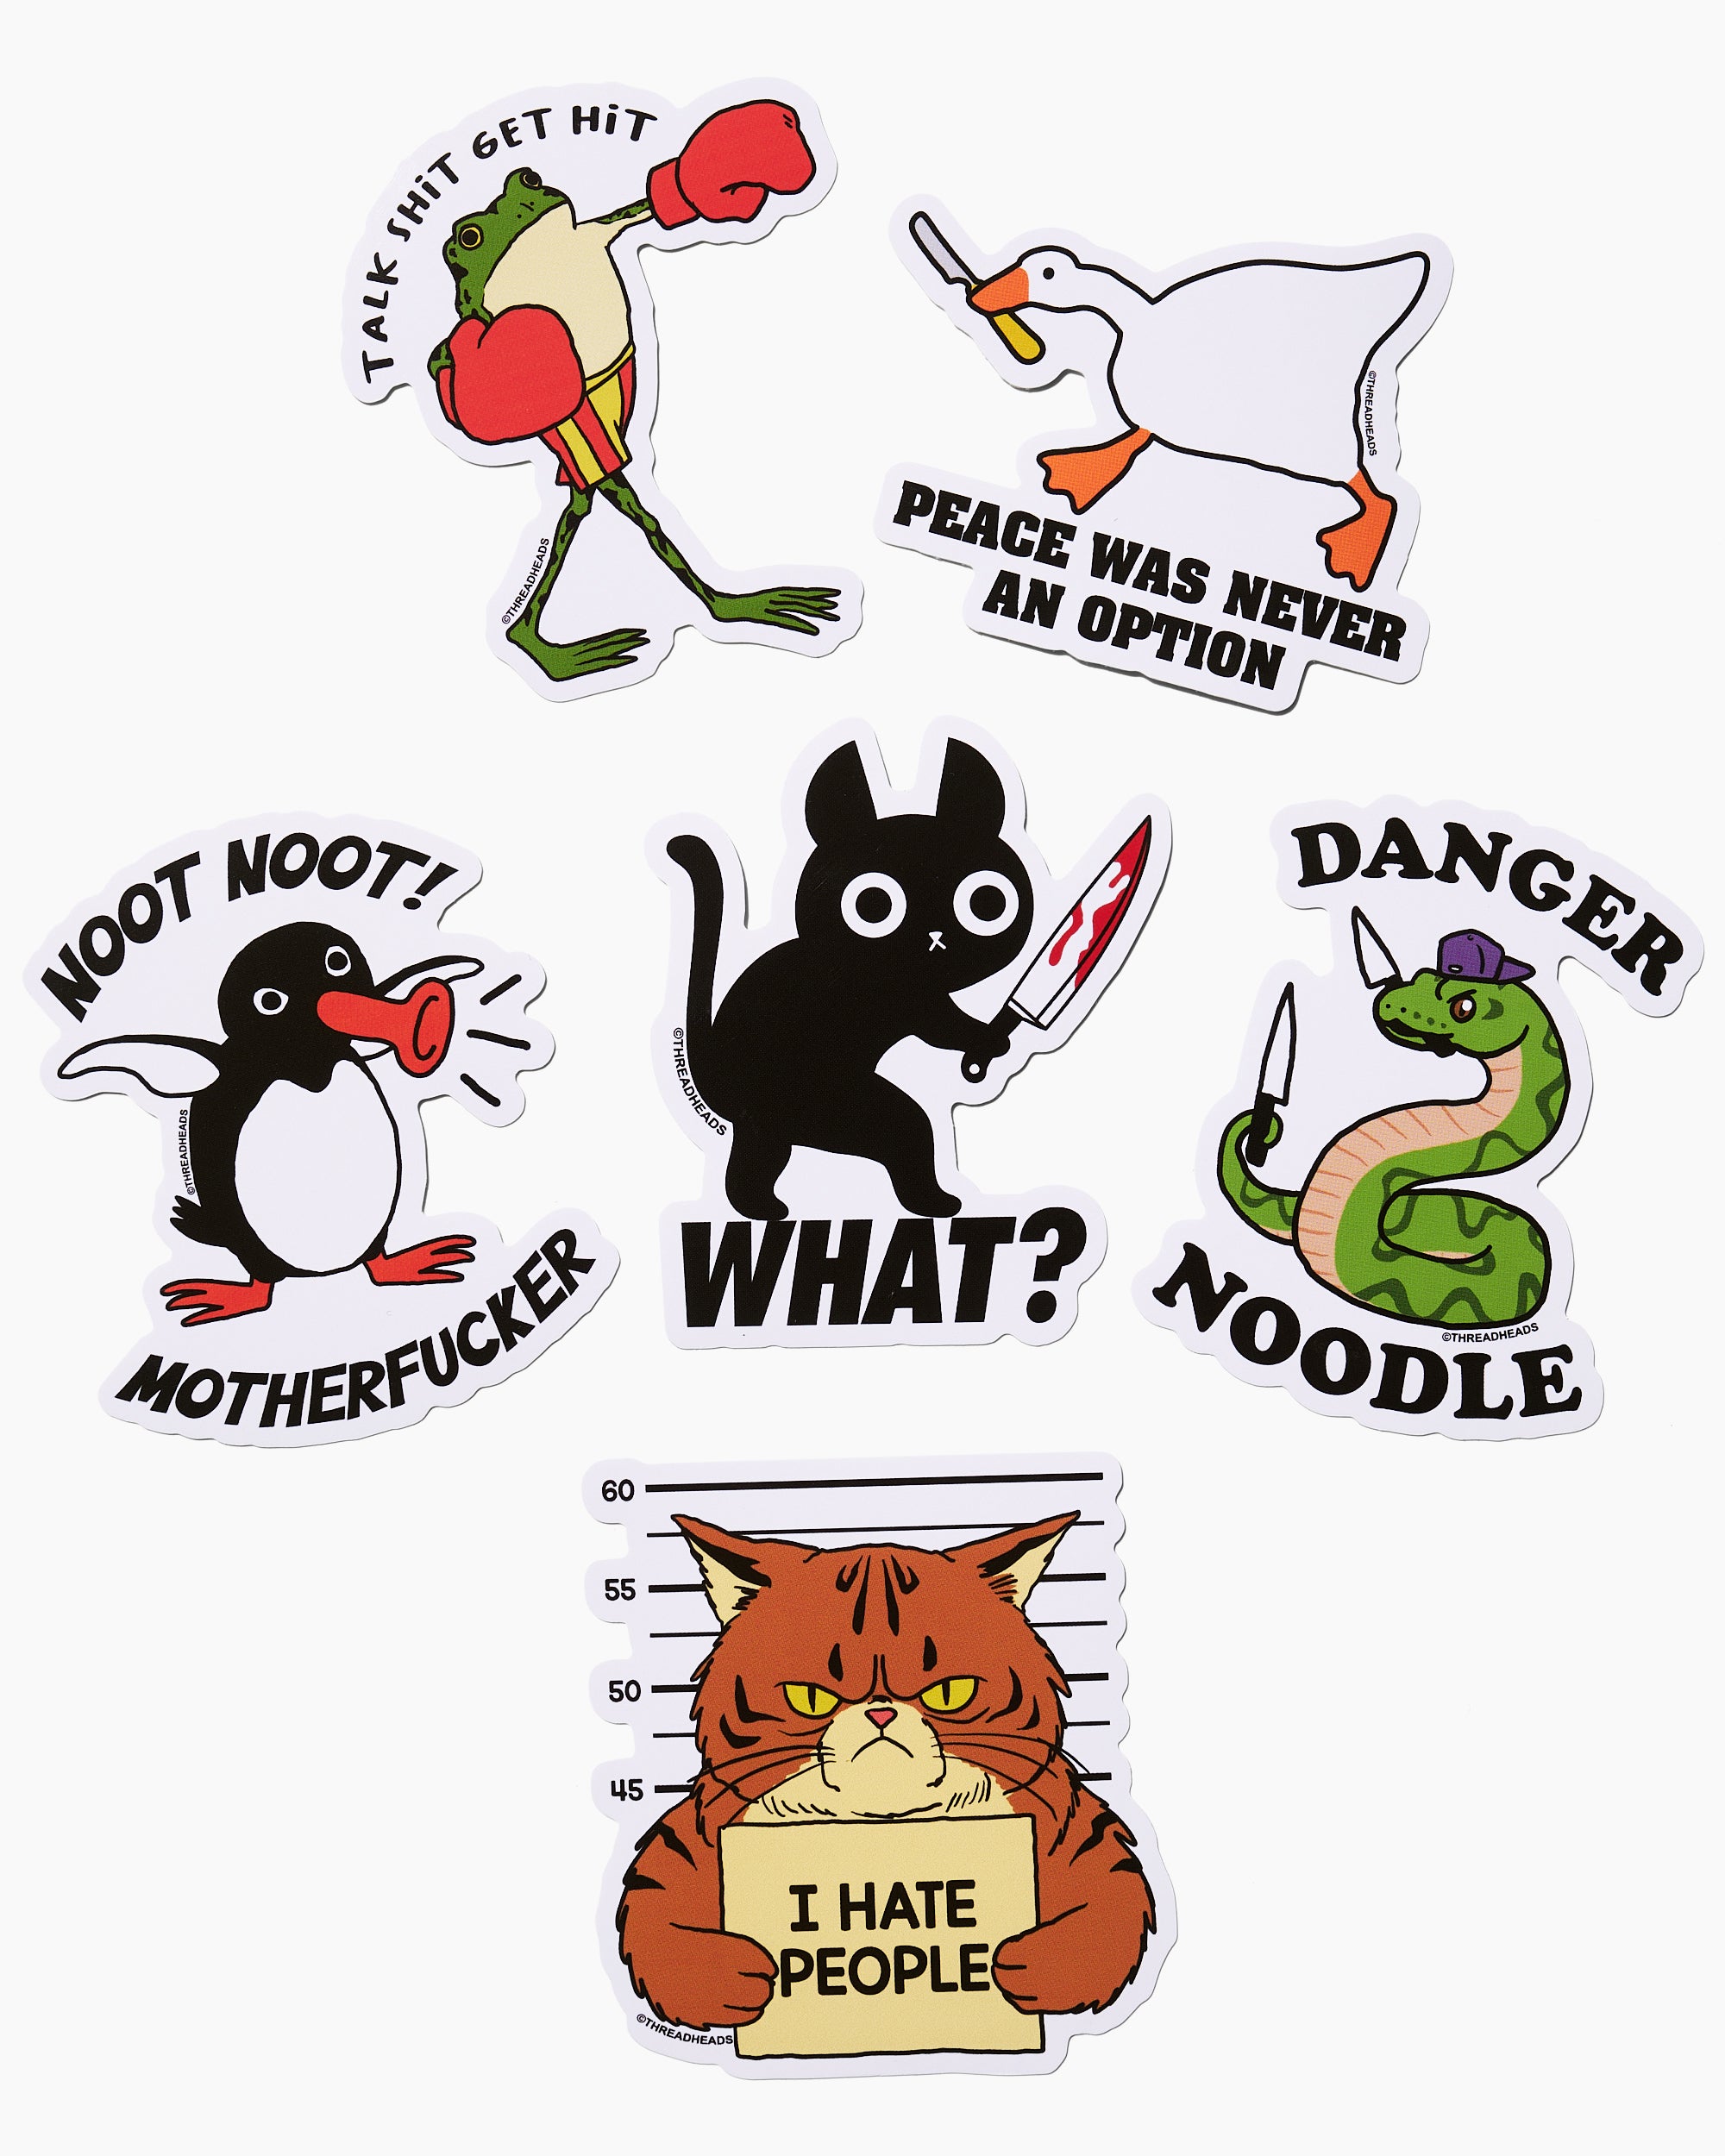 The Anti-Social Animal Sticker Pack